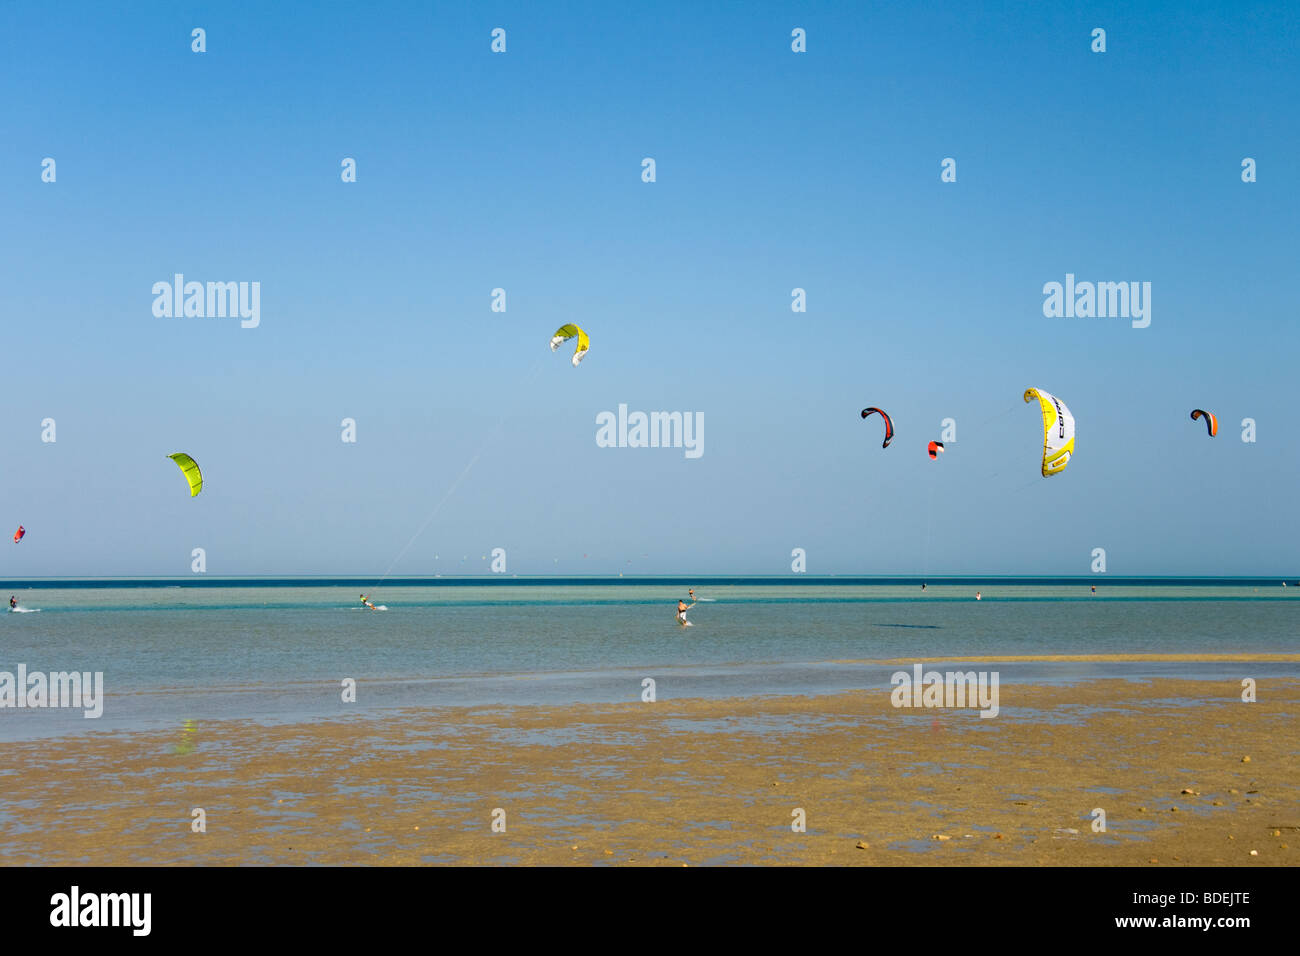 Kite surfing, El Gouna Beach, Red Sea, Egypt Stock Photo